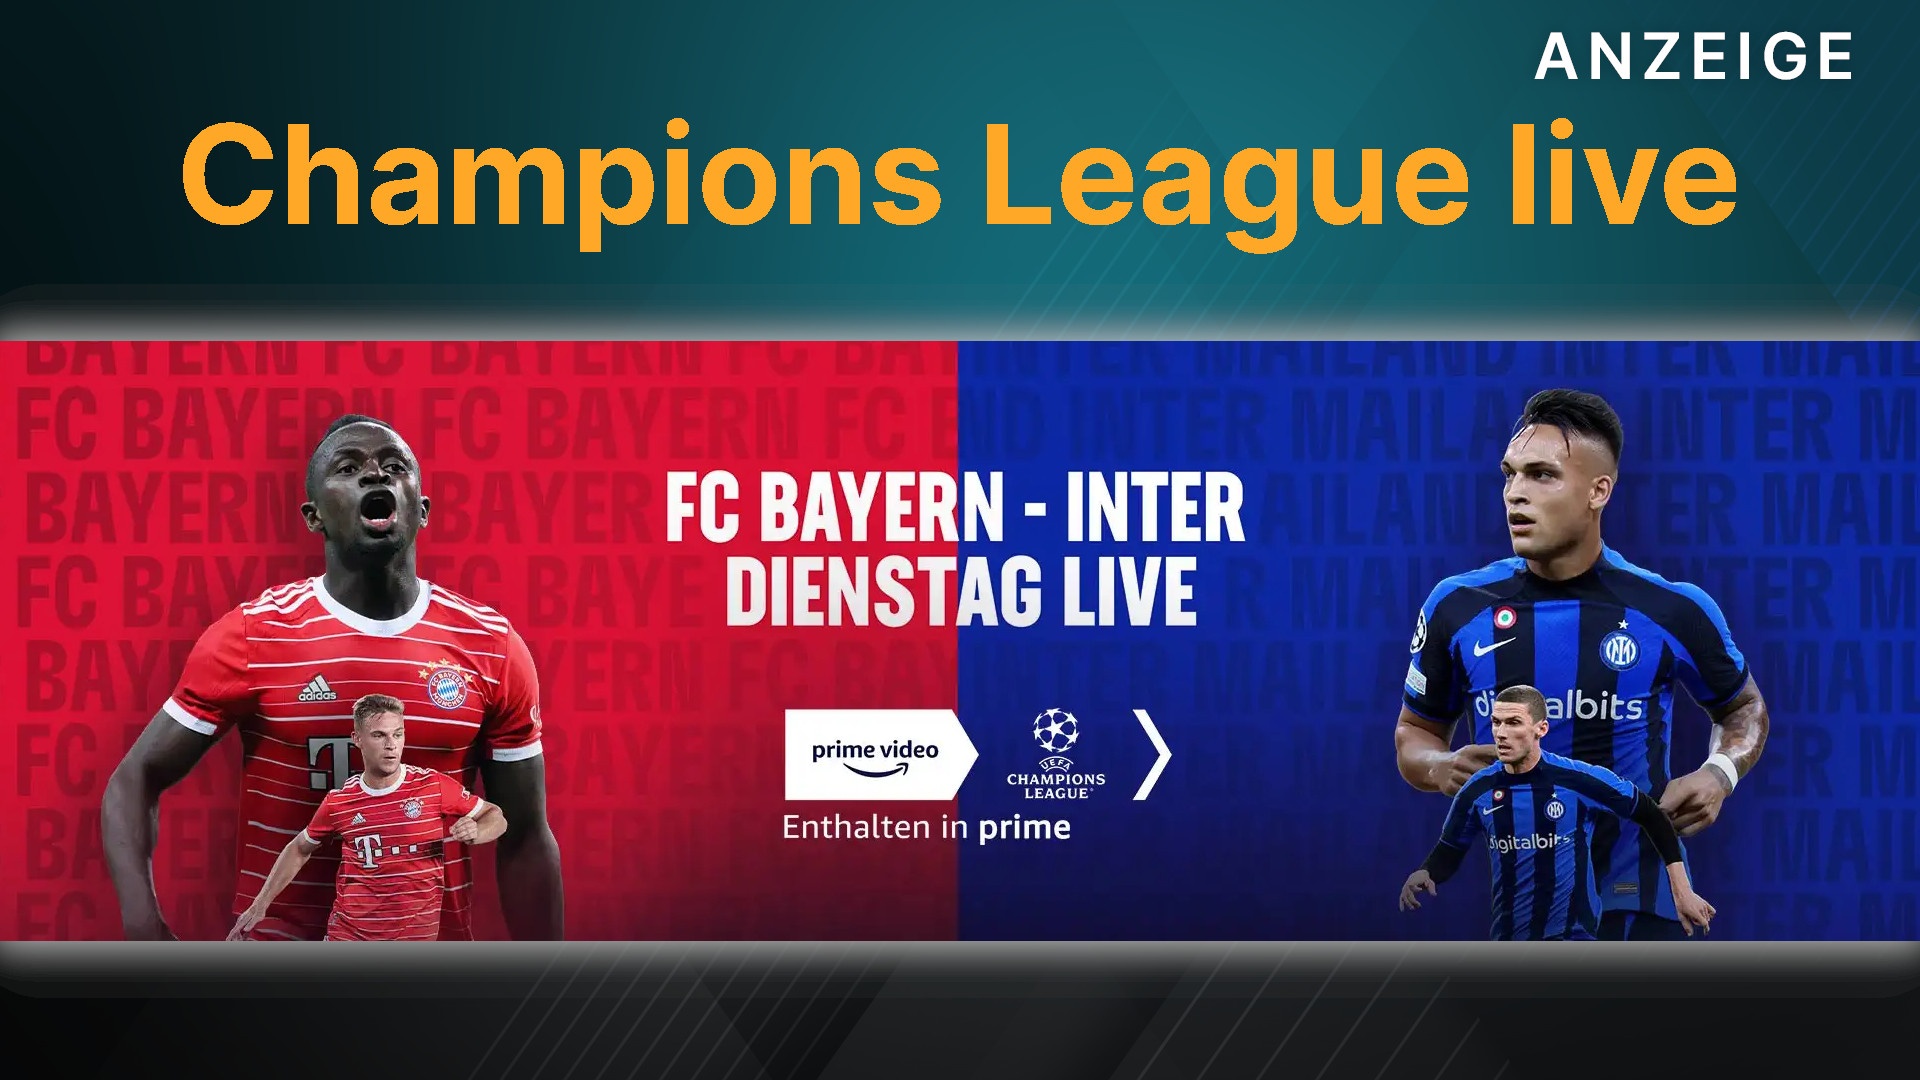 bayern champions league live